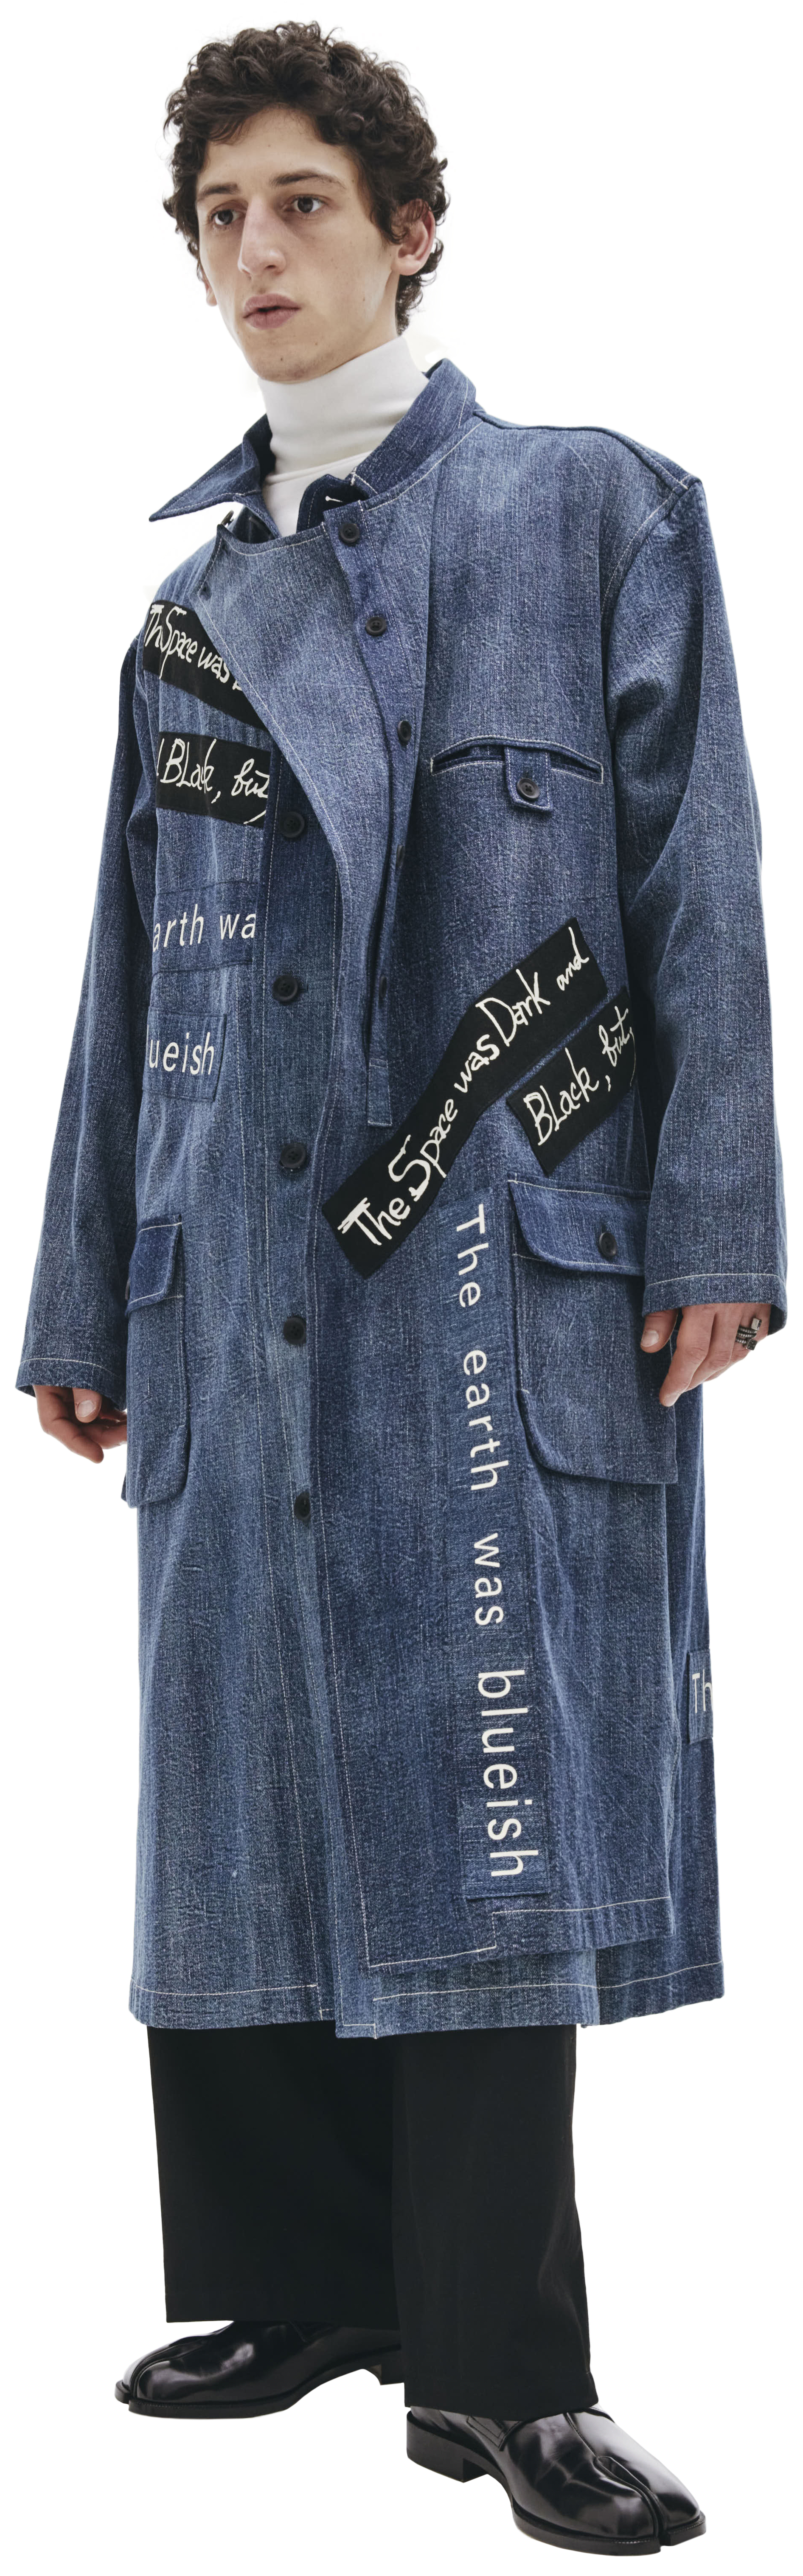 Buy Yohji Yamamoto men blue denim coat for $5,142 online on SV77,  HD-B47-005-1